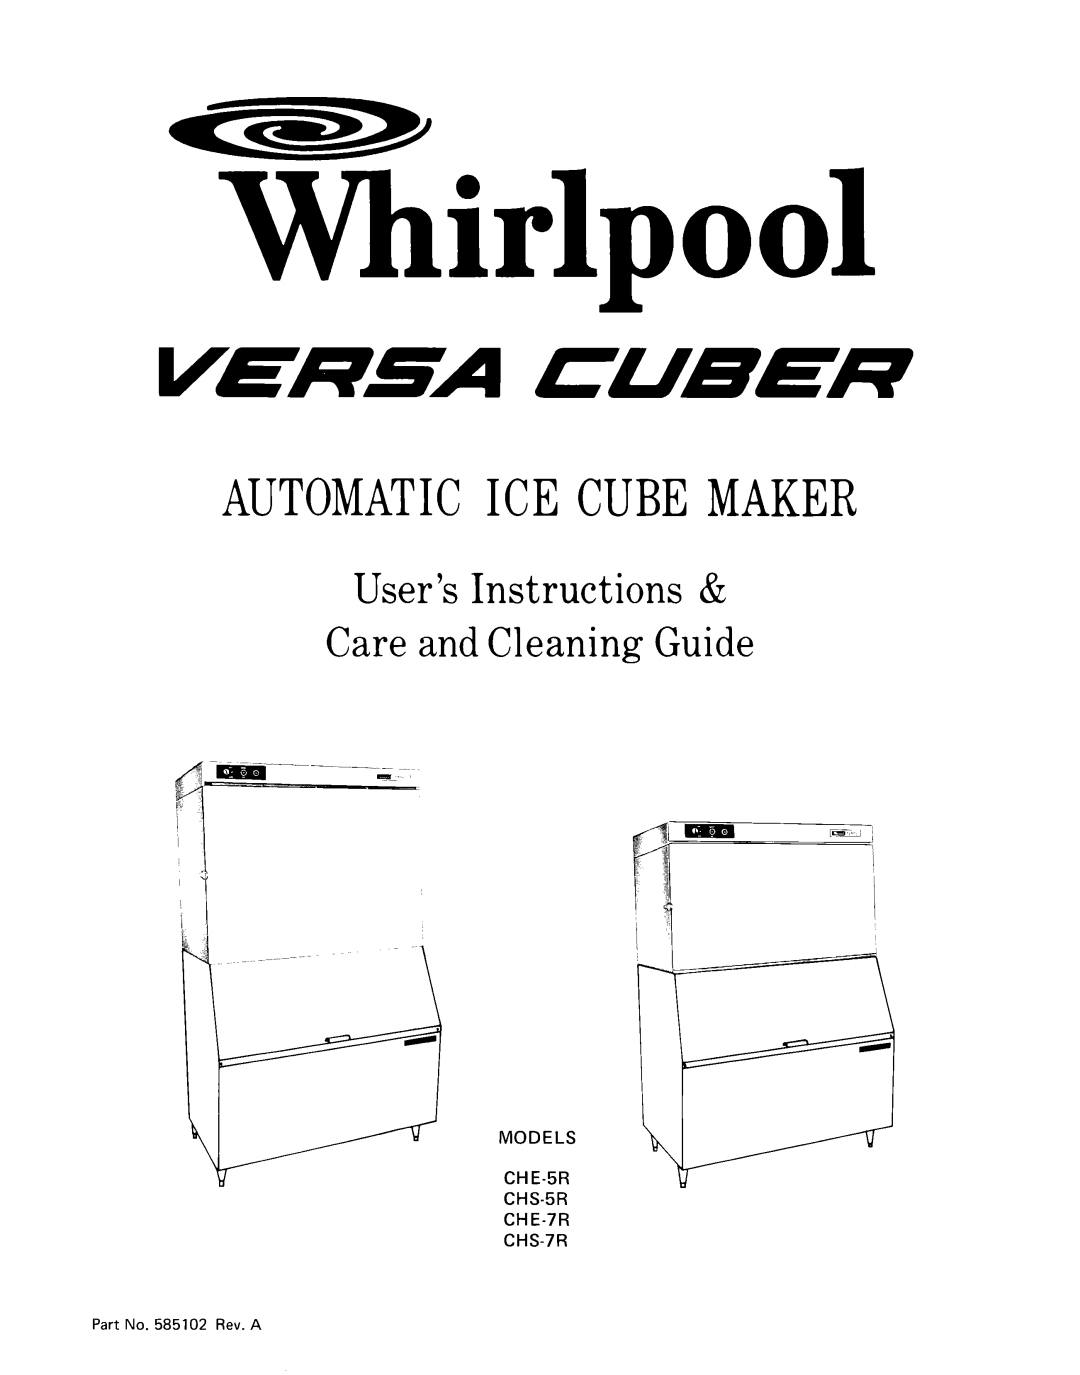 Whirlpool che-5r manual MODELS CH E-5R CHS-5R CHE-7R CHS-7R, Whirlpool, Automatic Ice Cube Maker 